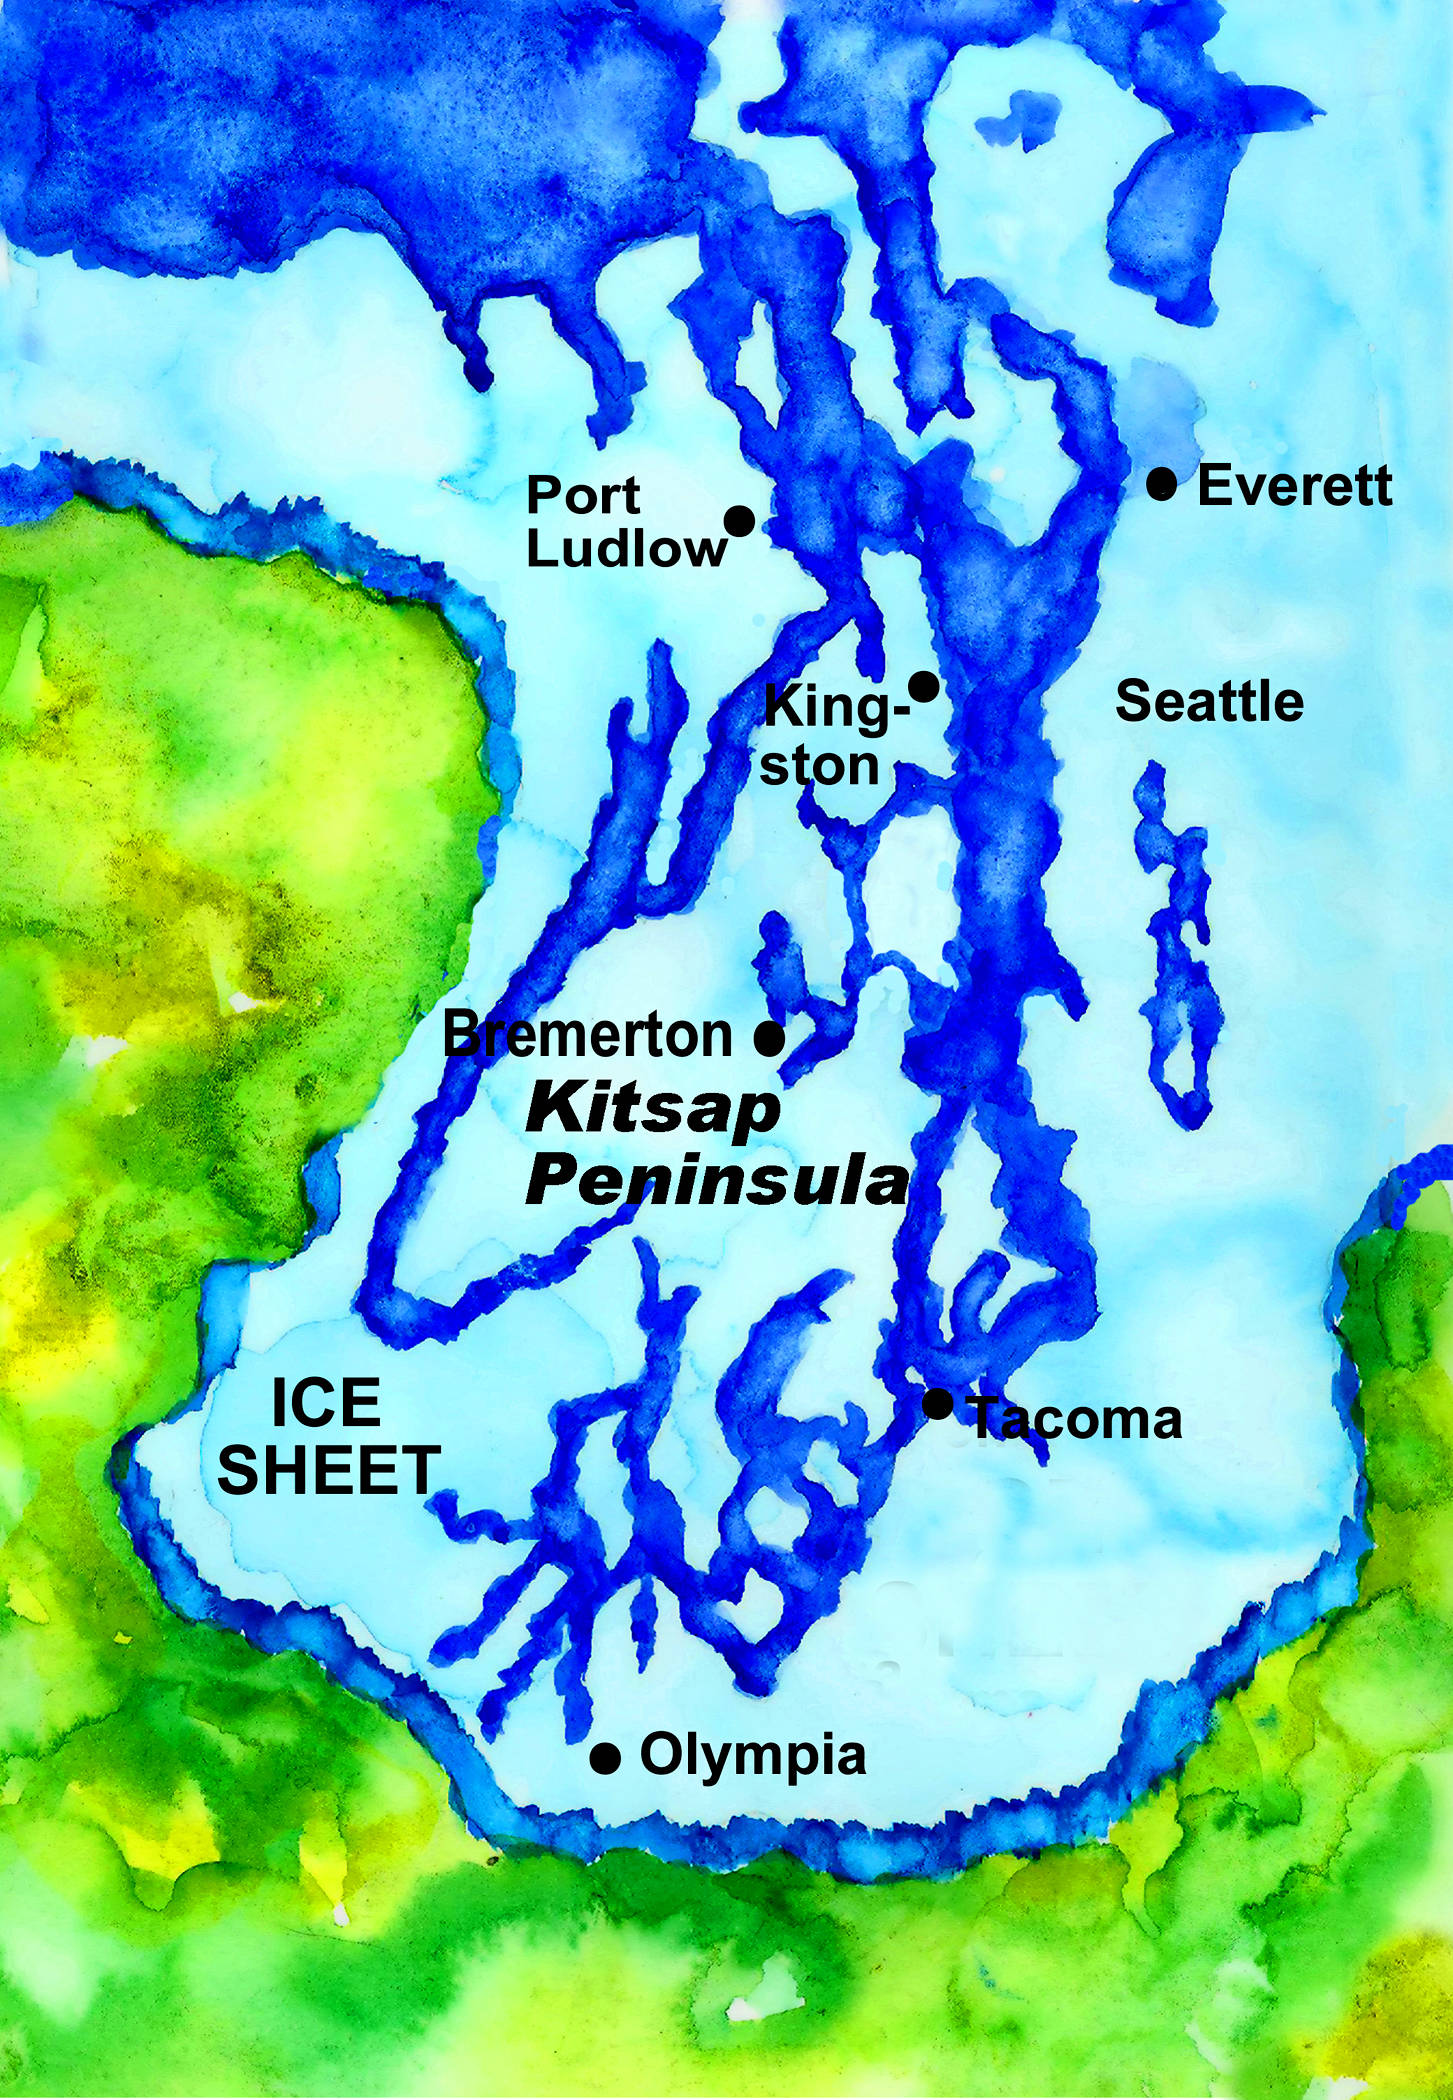 The birth of Puget Sound